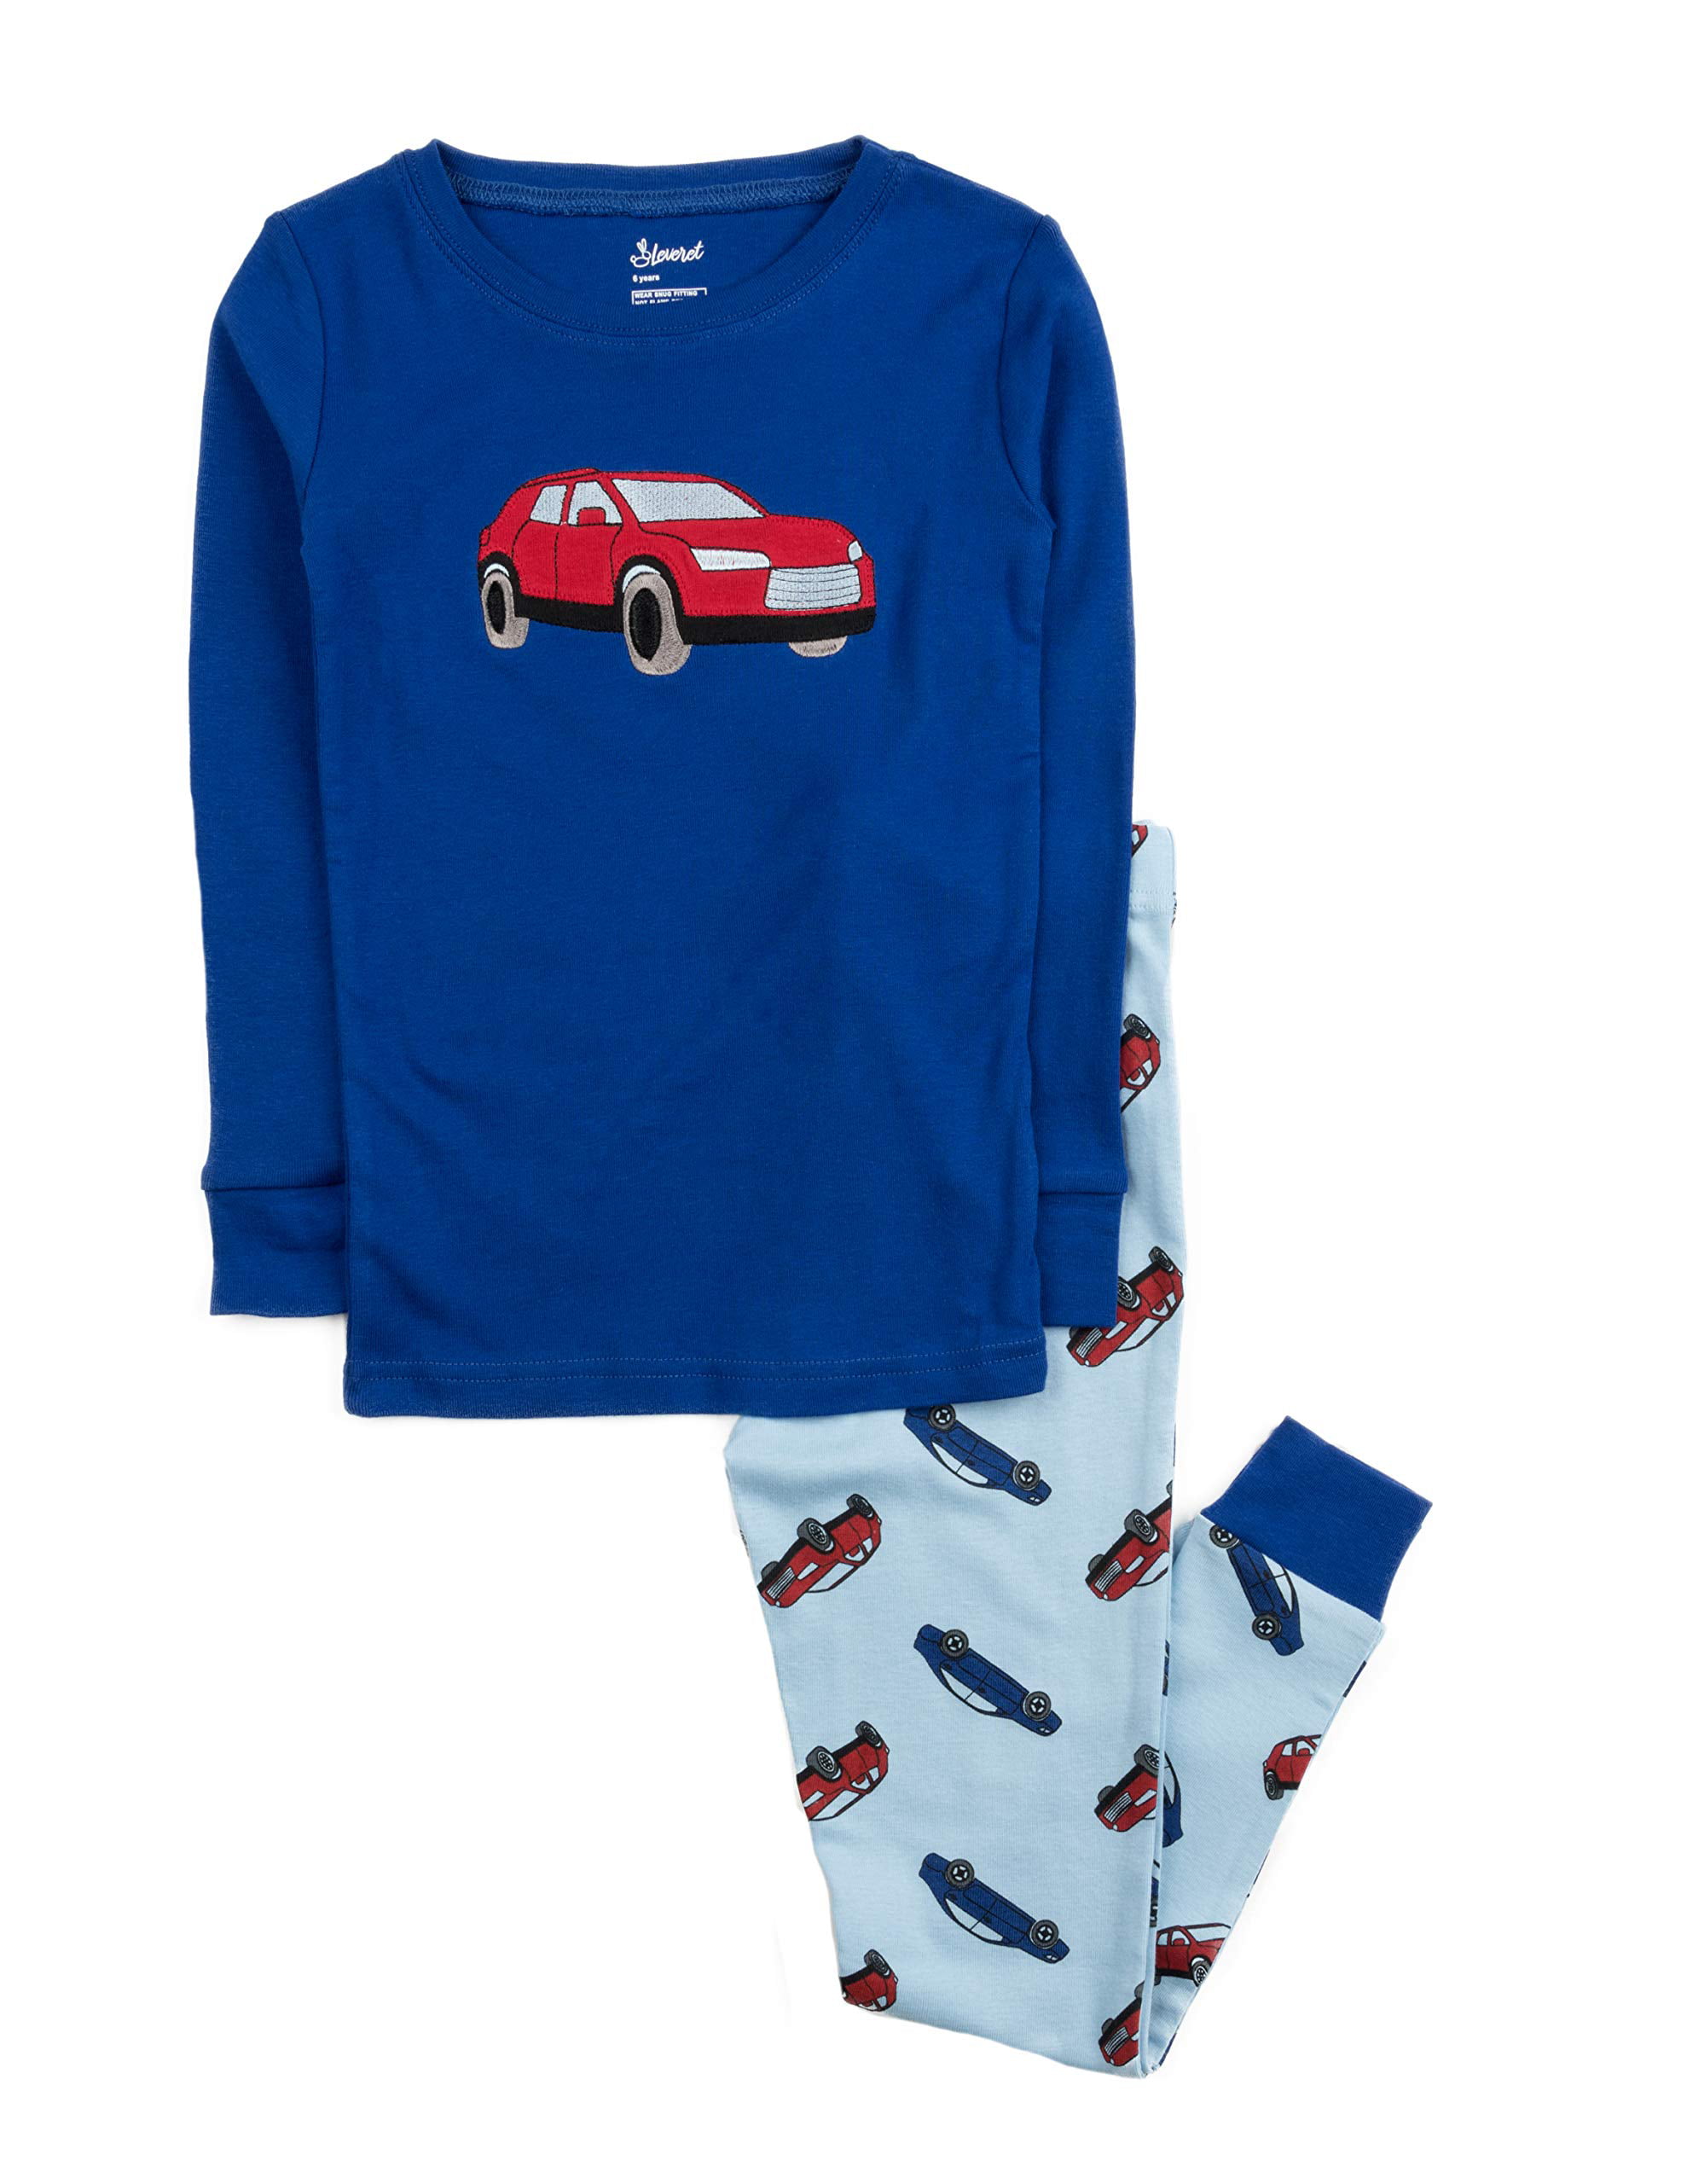 Details about   Boys 2Pc Pajama Set-Airplane Print 100% Cotton-Leveret-Boys-SZ 3Yrs & 4Yrs NWT 